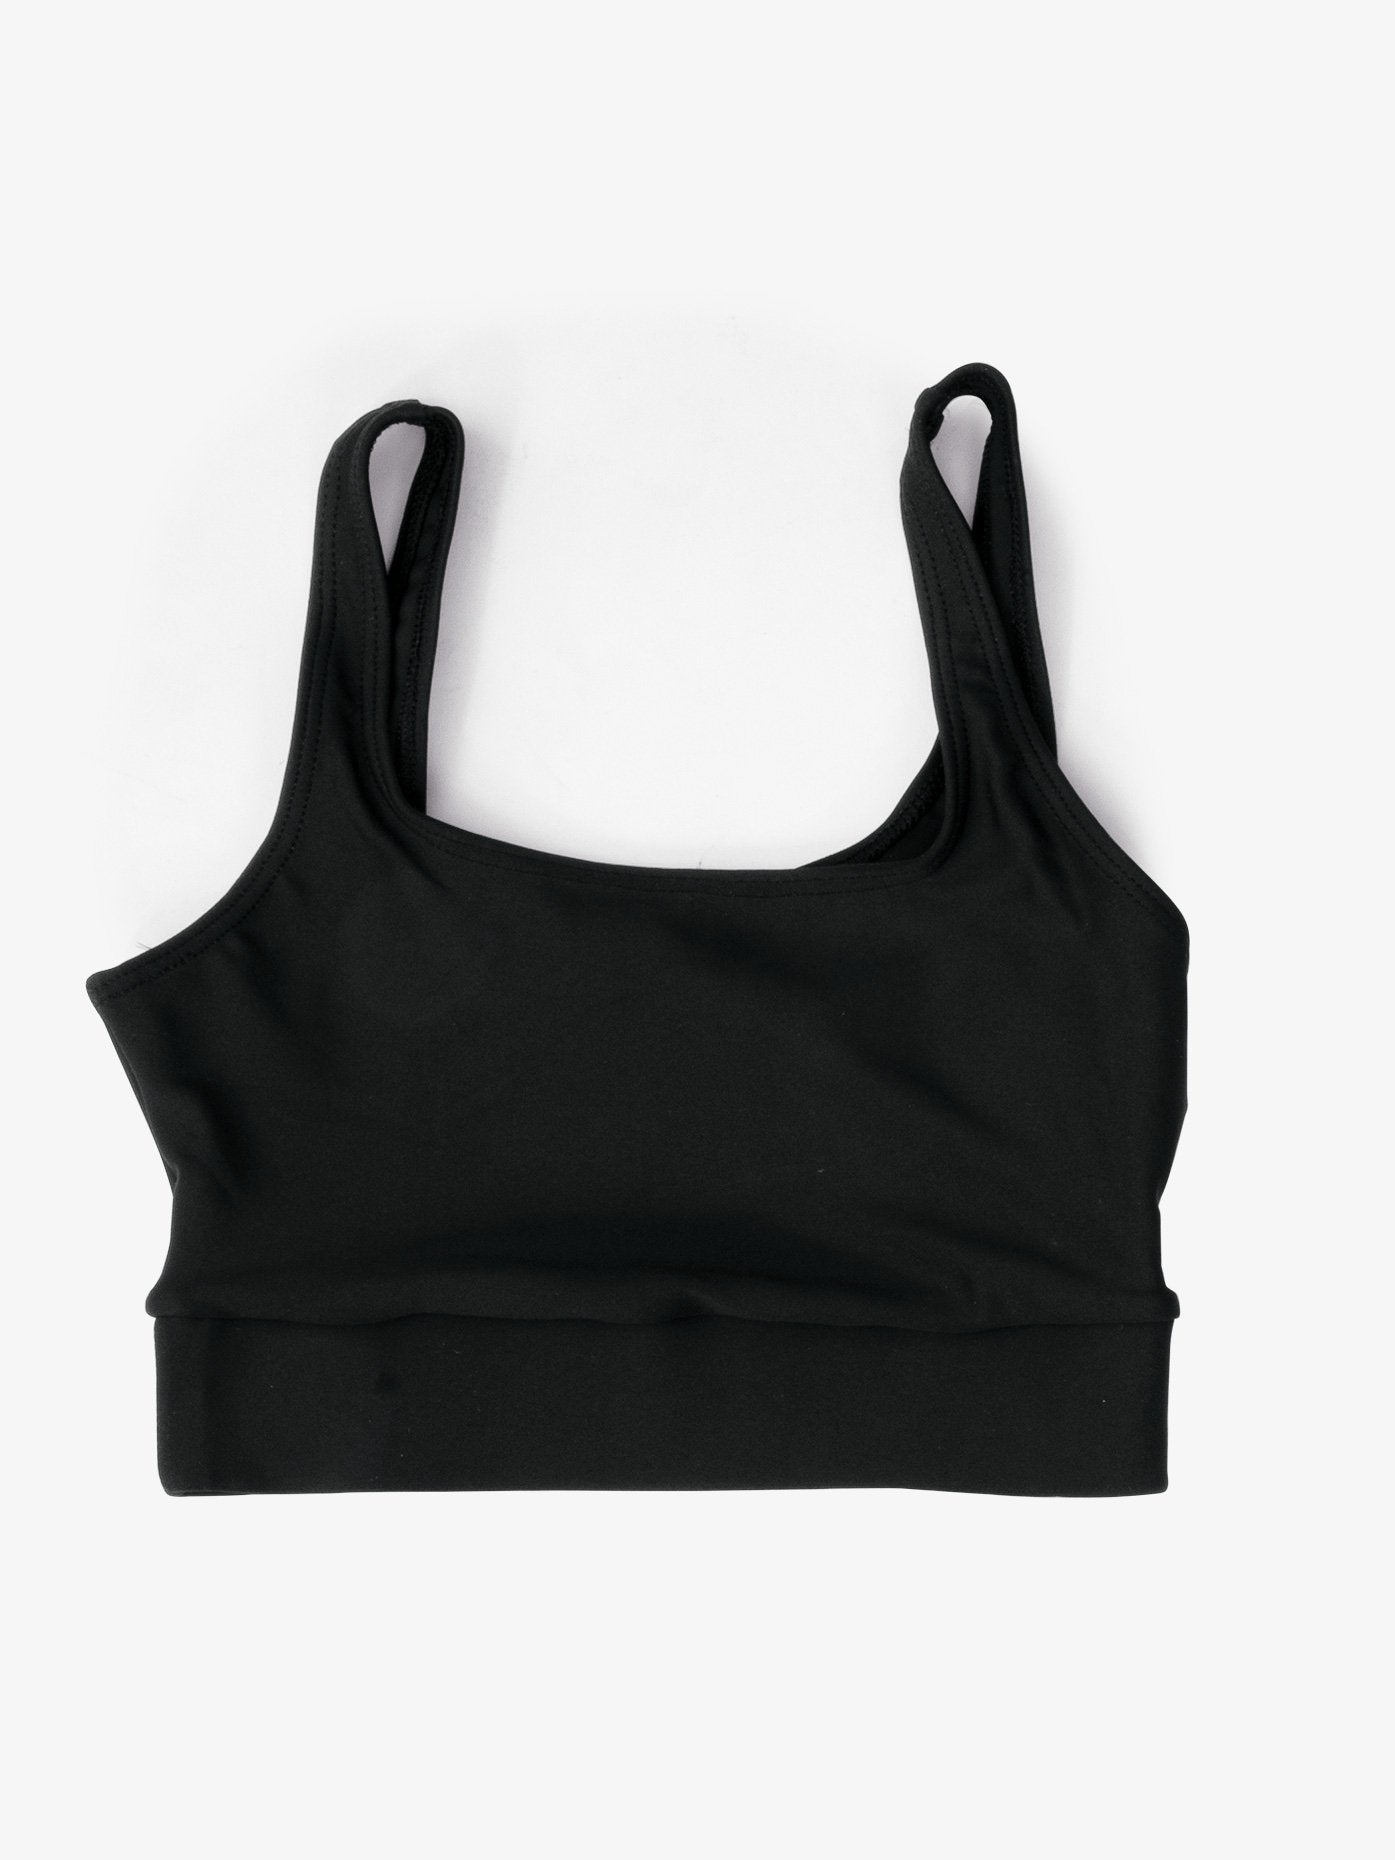 Women’s pinched back black bra top